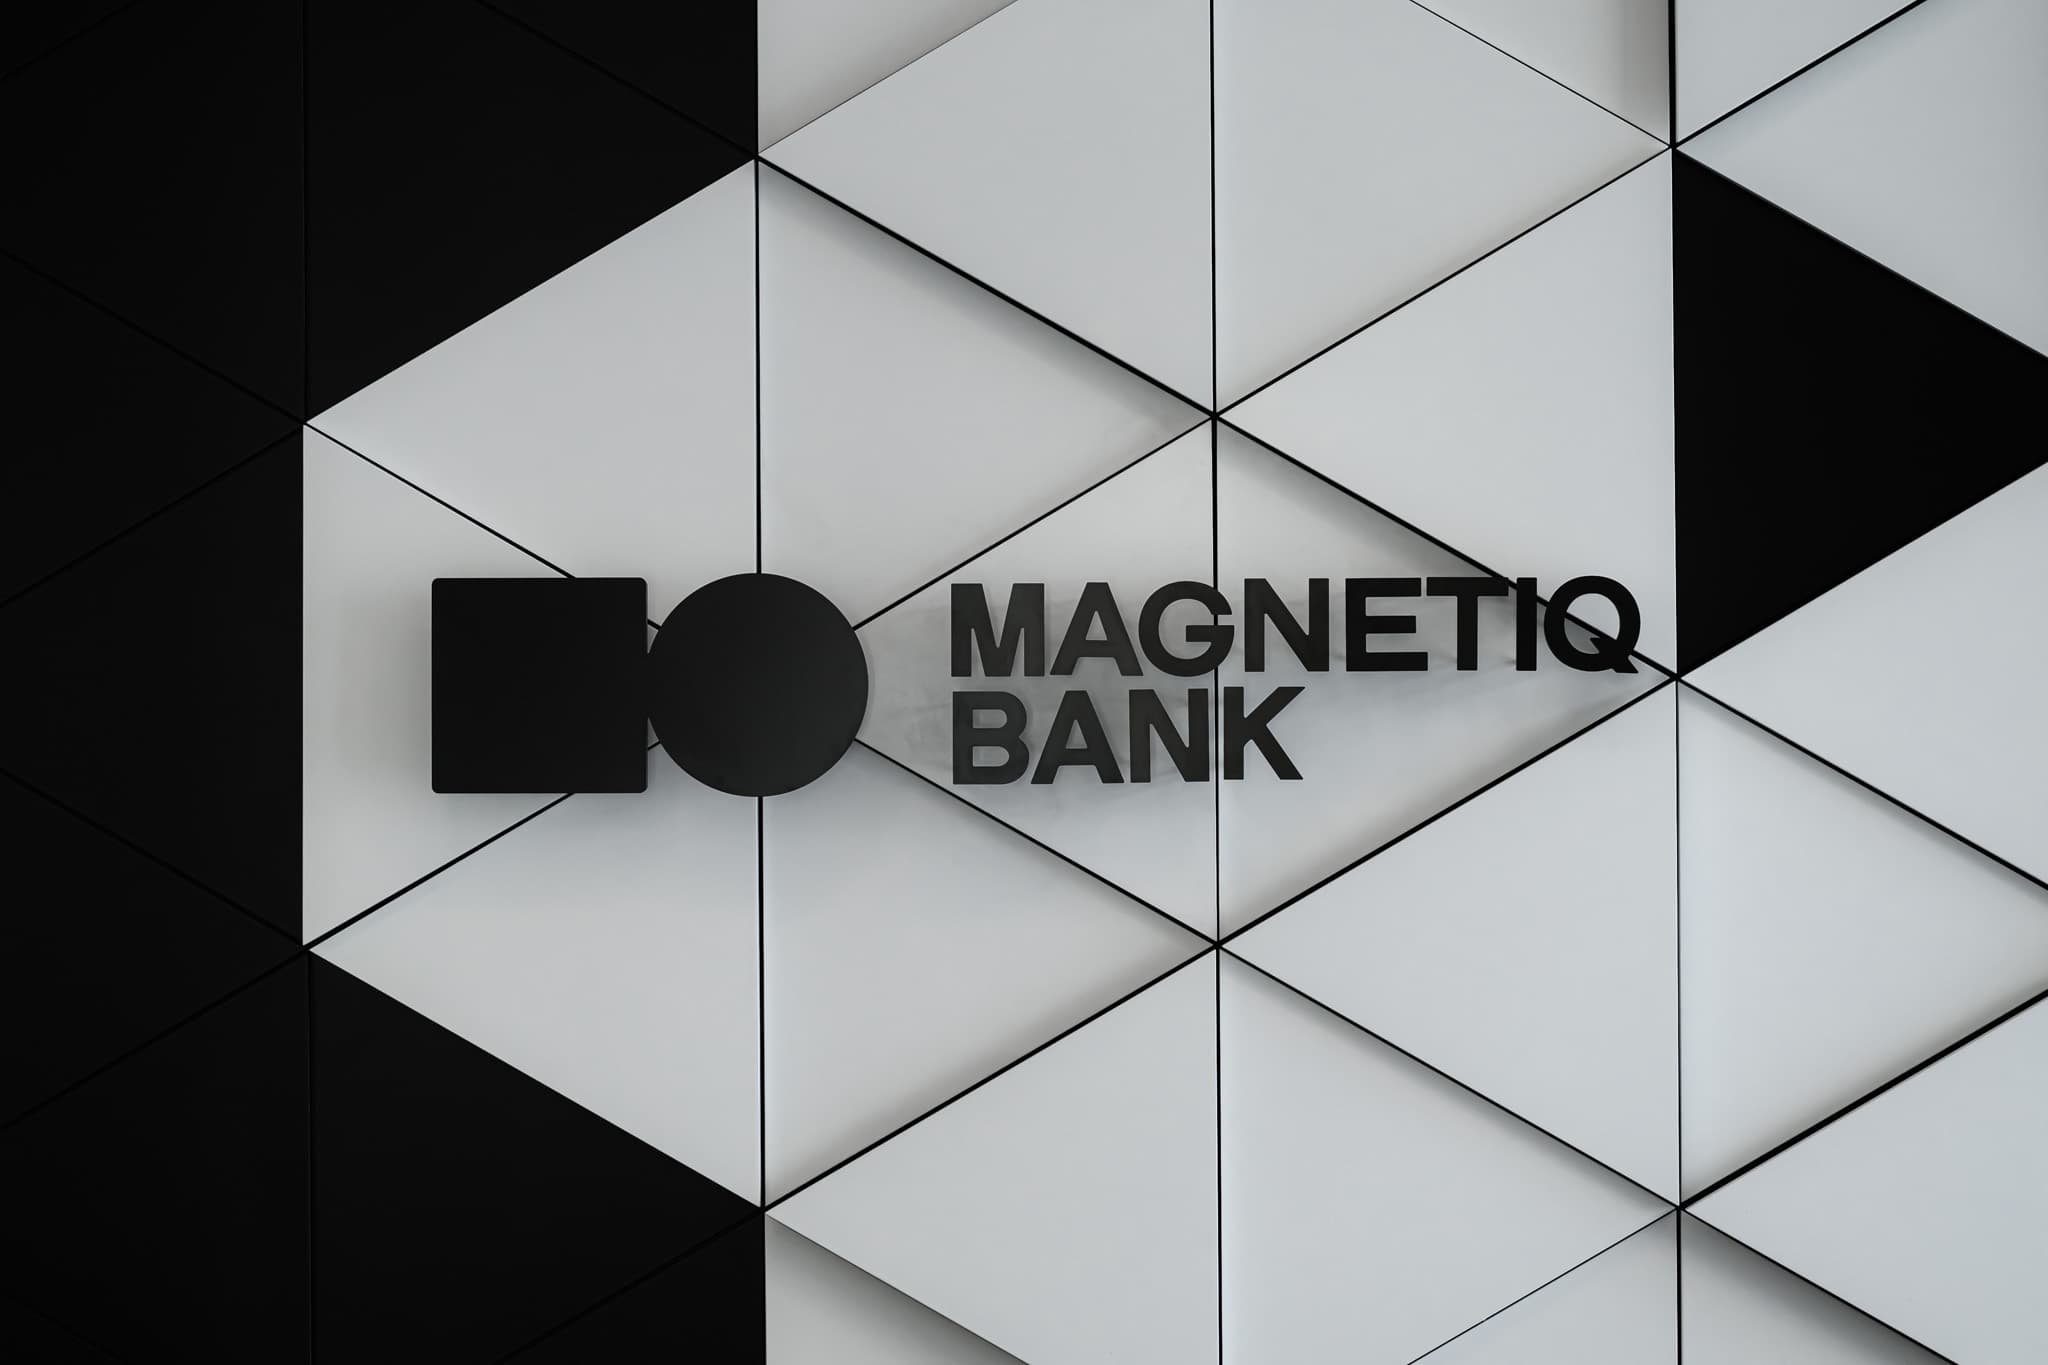 Magnetiq bank